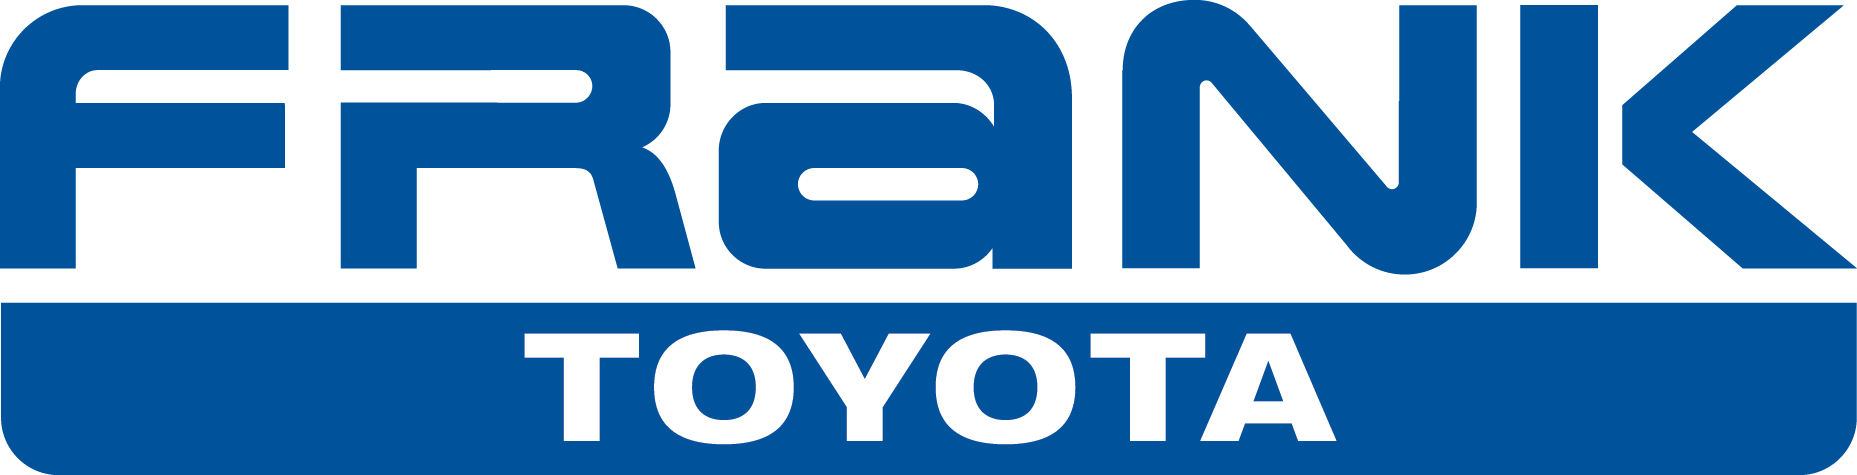 New Frank Toyota Logo - Frank Hyundai (1857x475), Png Download